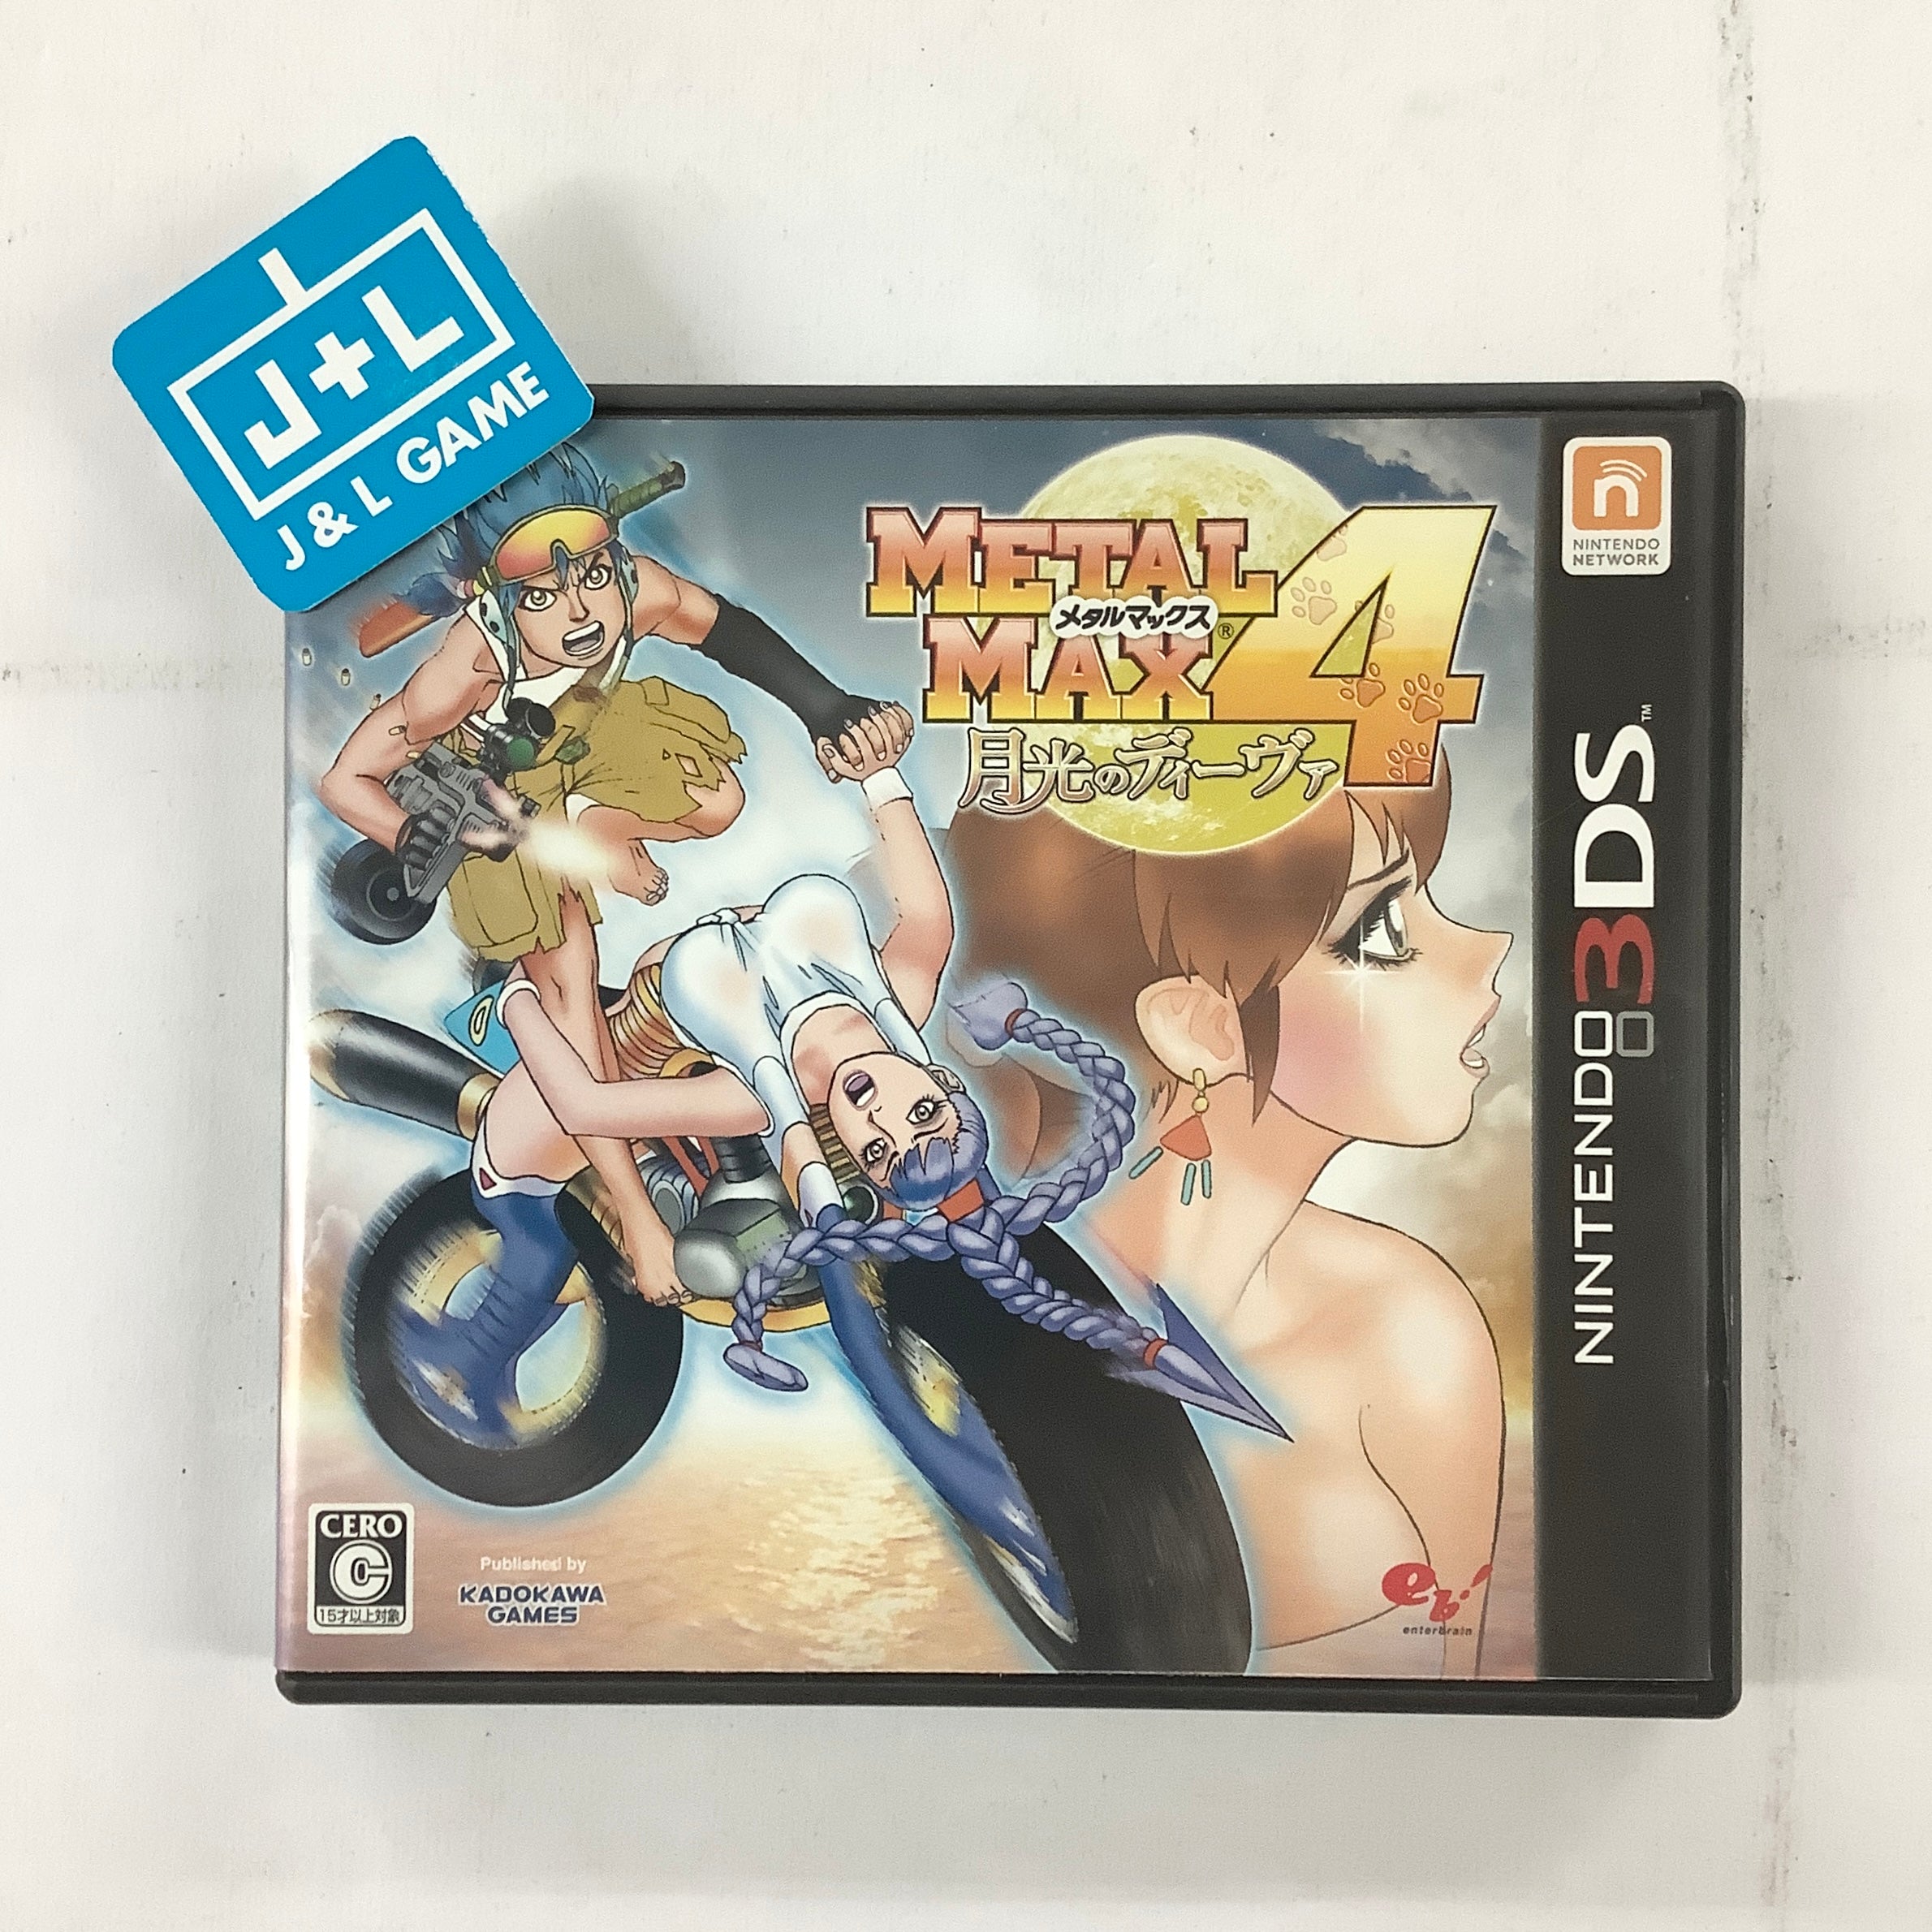 Metal Max 4: Gekkou no Diva - Nintendo 3DS [Pre-Owned] (Japanese Import)